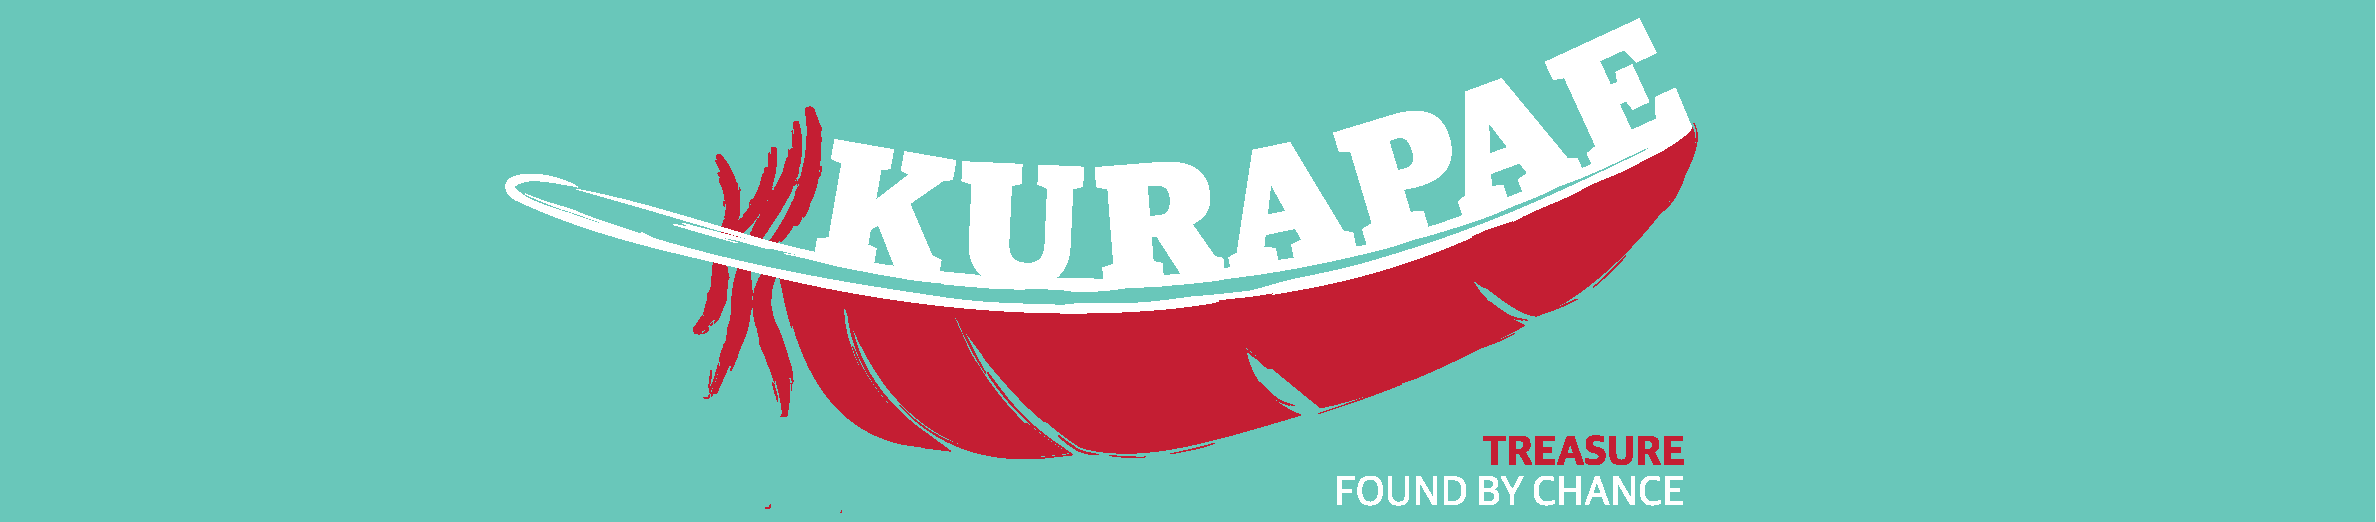 Kurapae: treasure found by chance